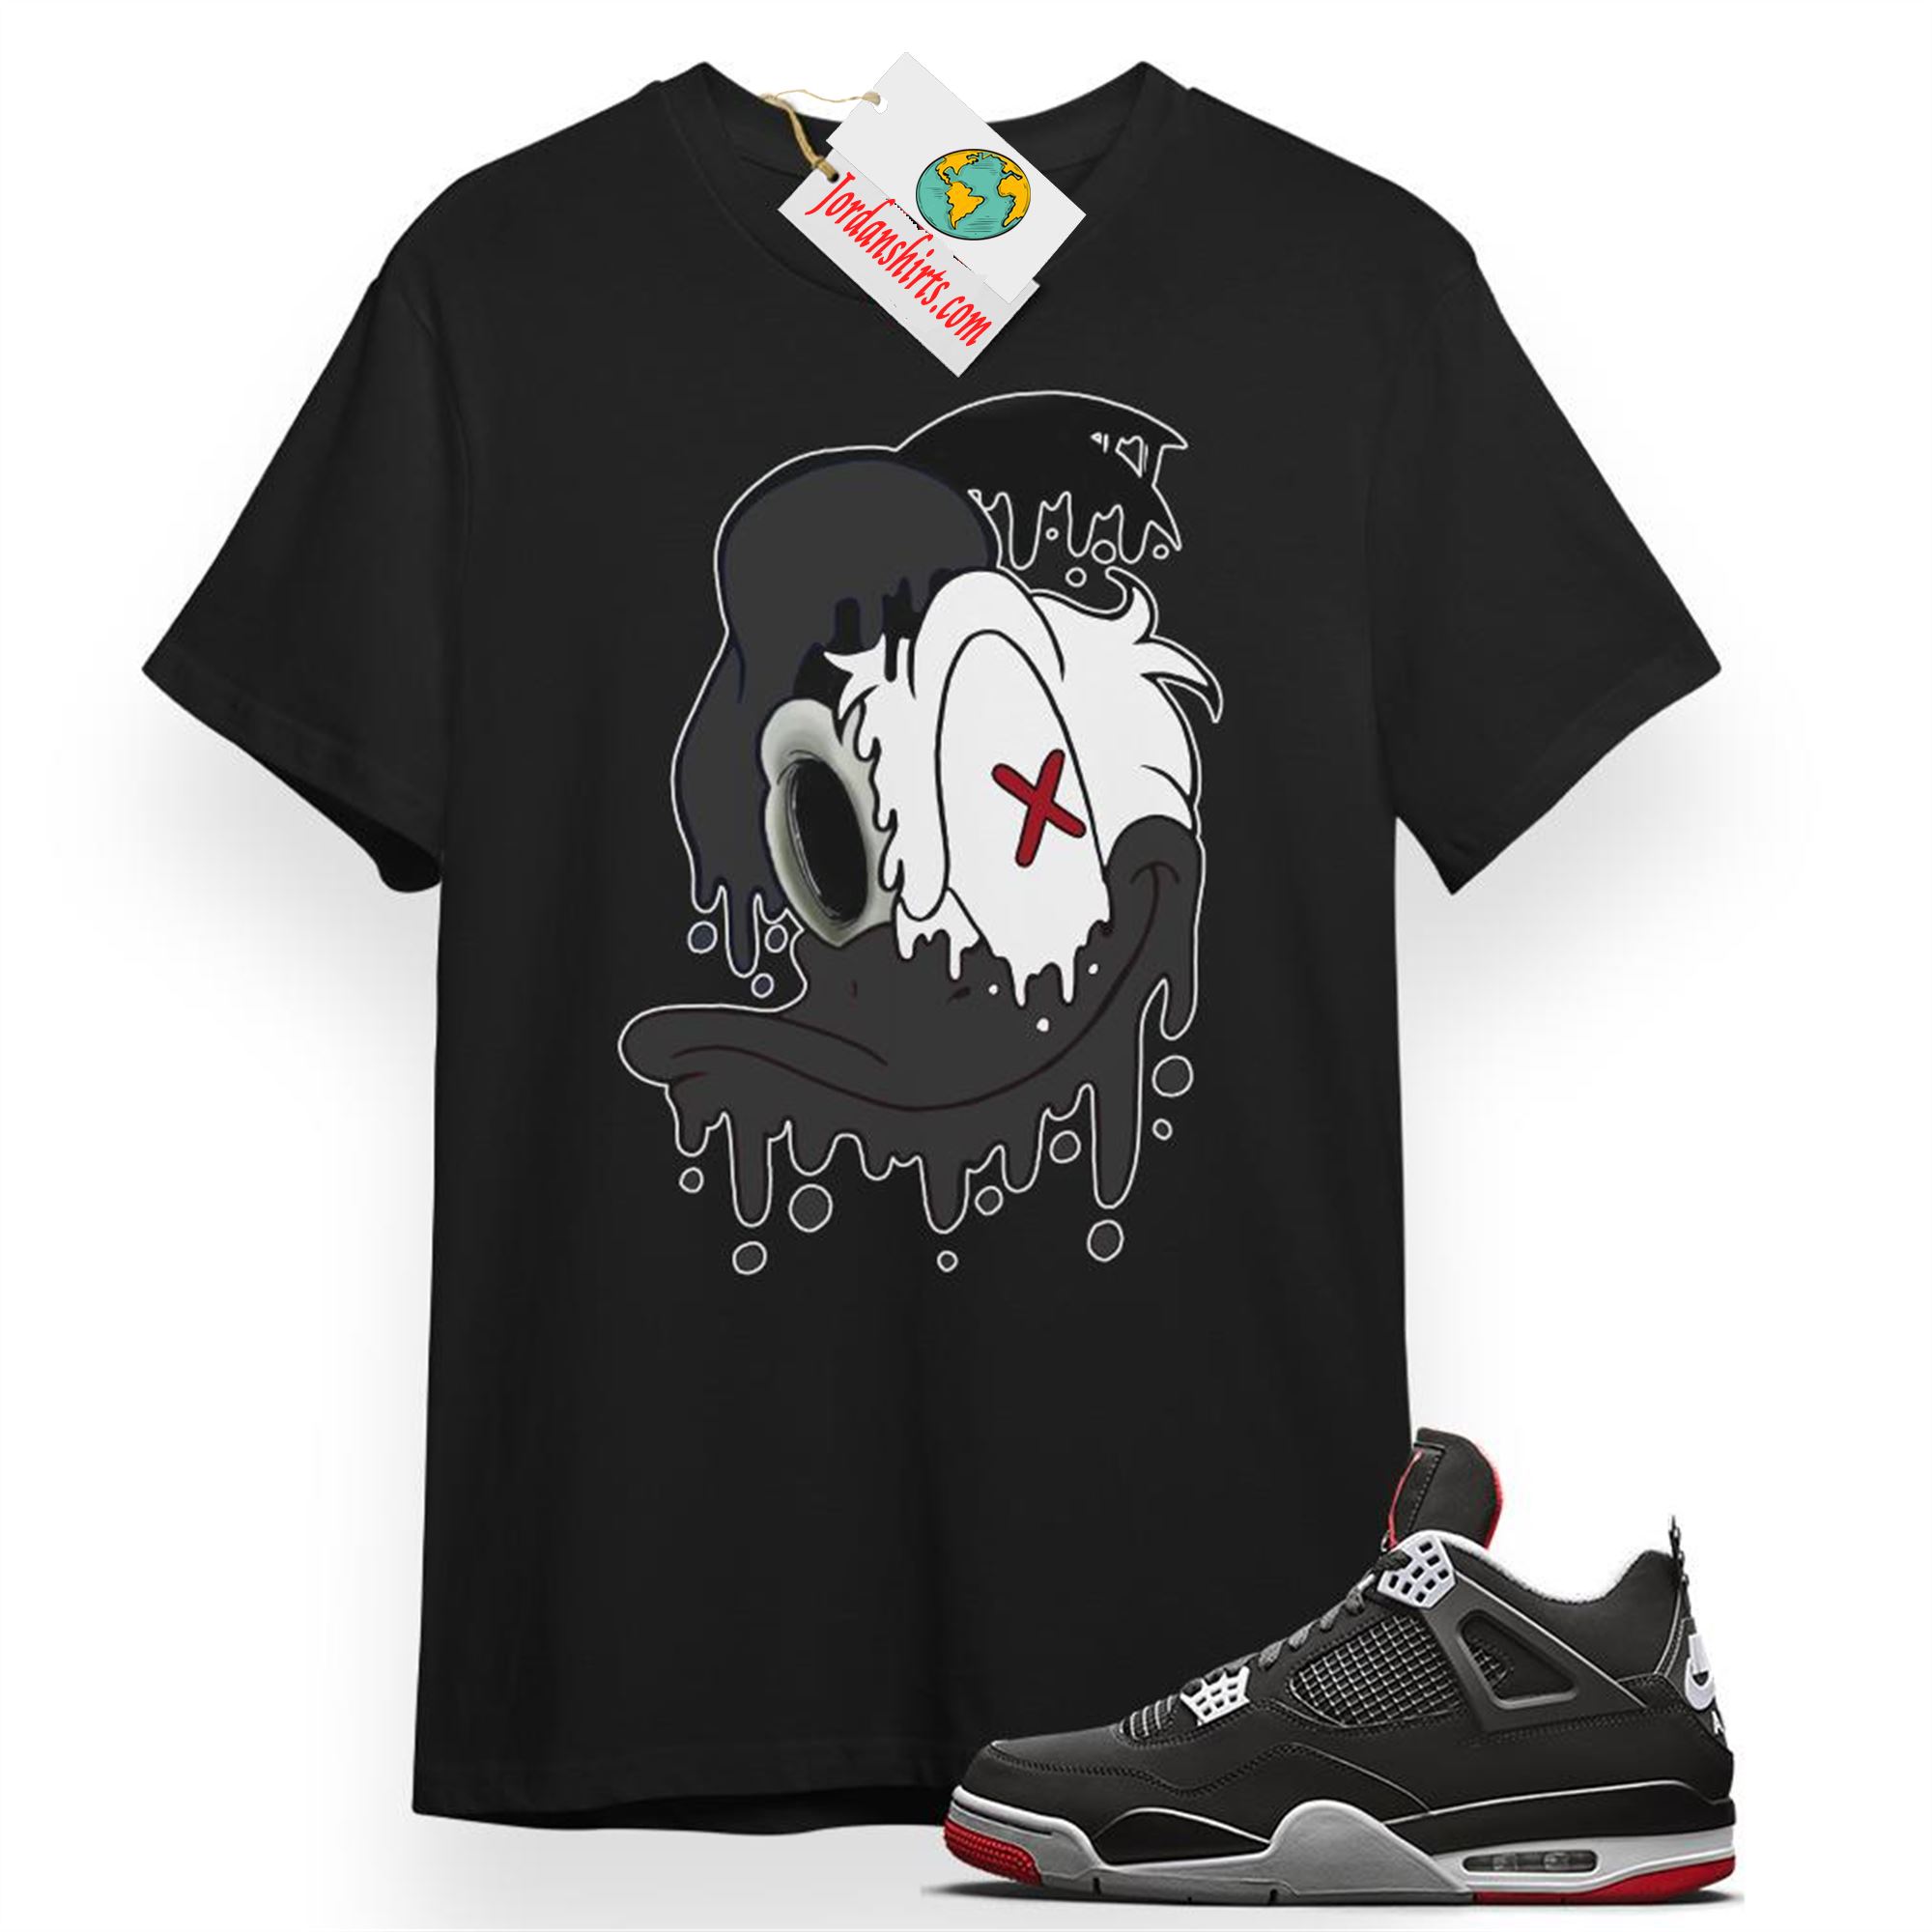 Jordan 4 Shirt, Donald Dripping Black T-shirt Air Jordan 4 Bred 4s Size Up To 5xl